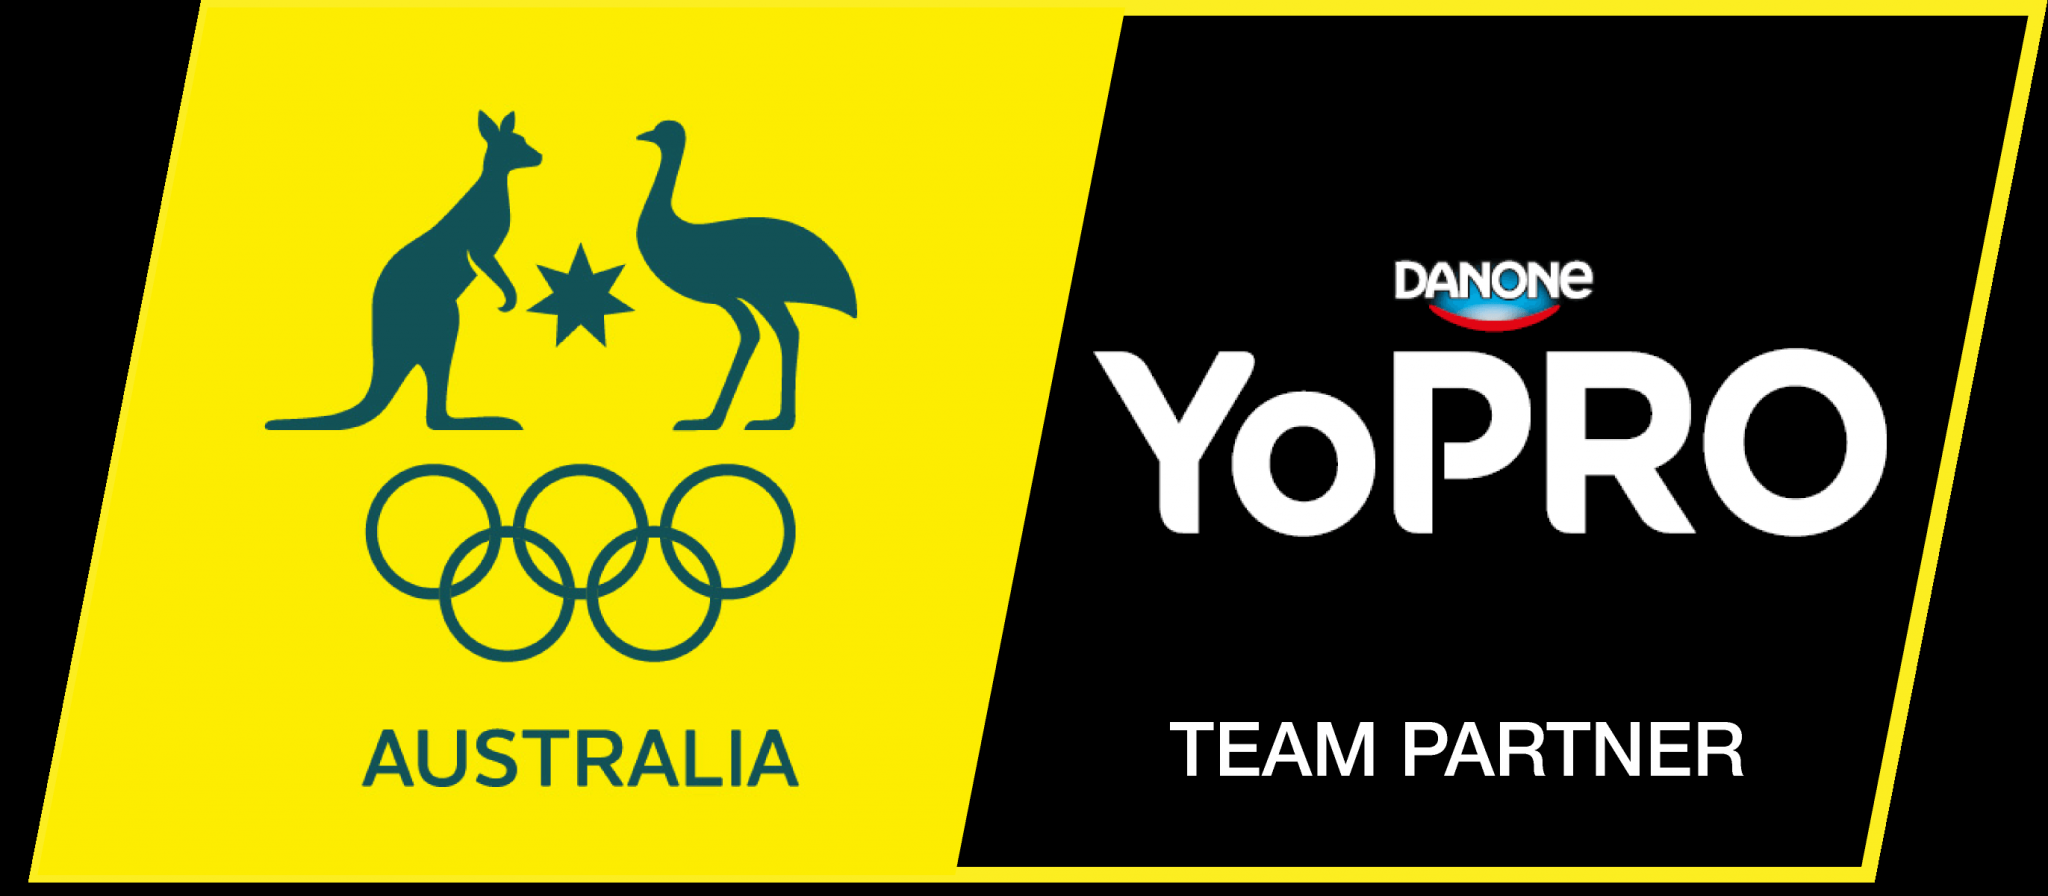 YoPRO named official partner of Australia's Tokyo 2020 Olympic team